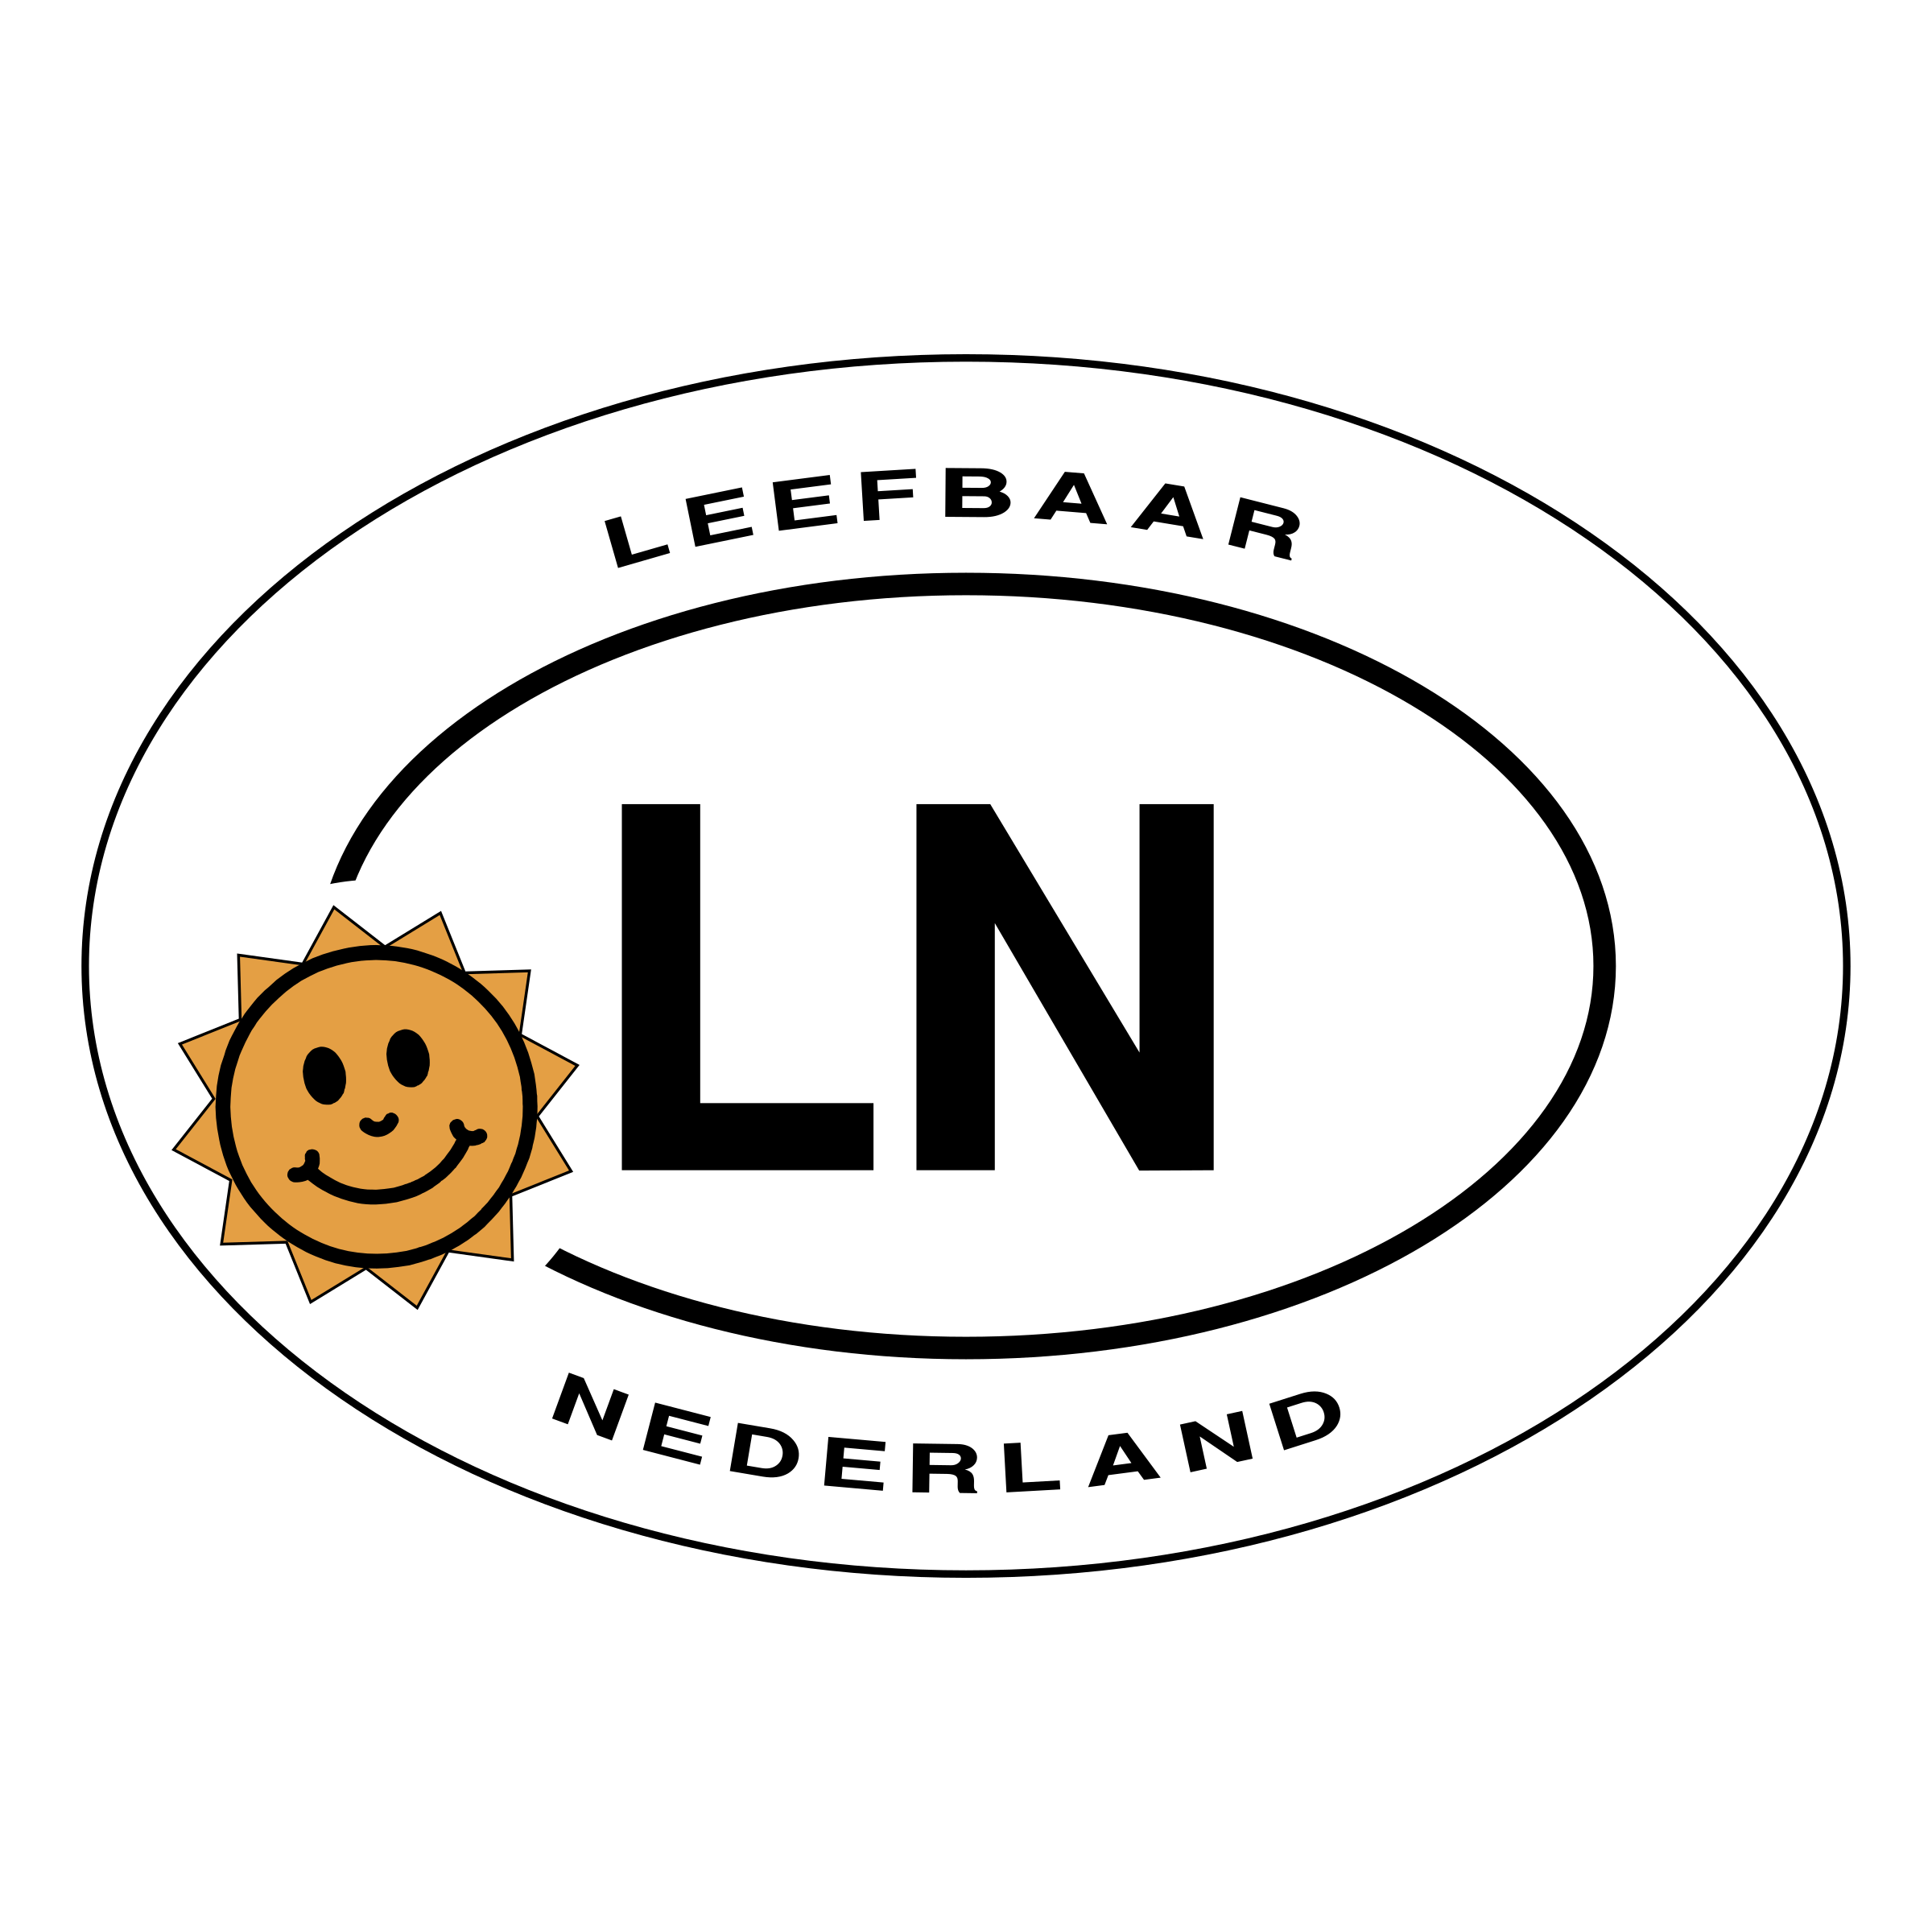 Ln Logo - LN Logo PNG Transparent & SVG Vector - Freebie Supply